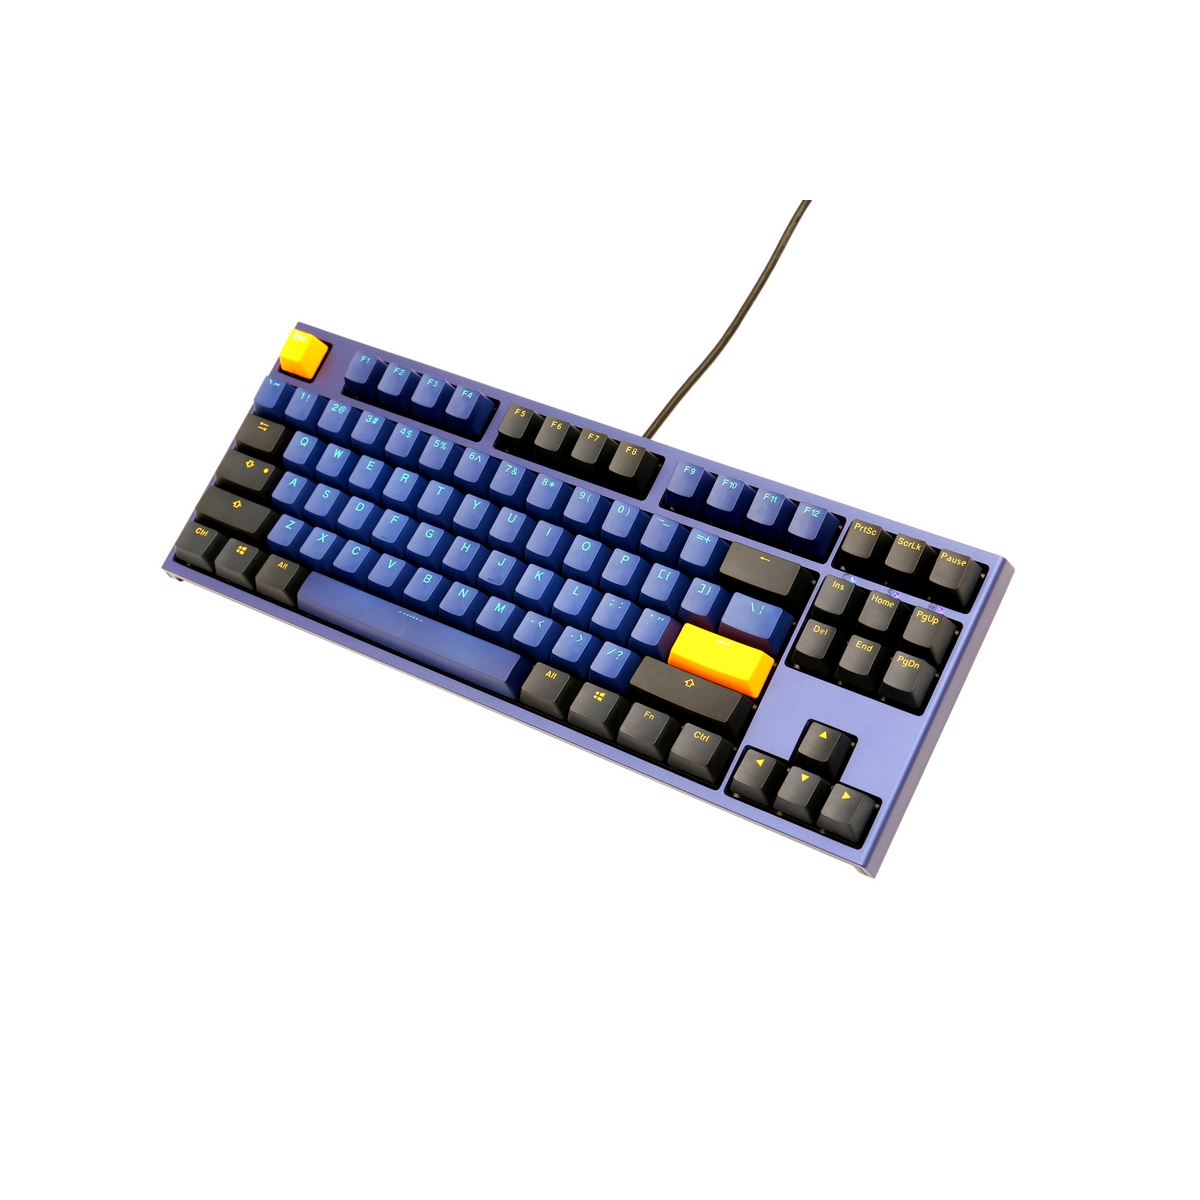 Ducky - Ducky One 2 TKL Horizon Blue Cherry MX Switch USB Mechanical Gaming Keyboard UK Layout